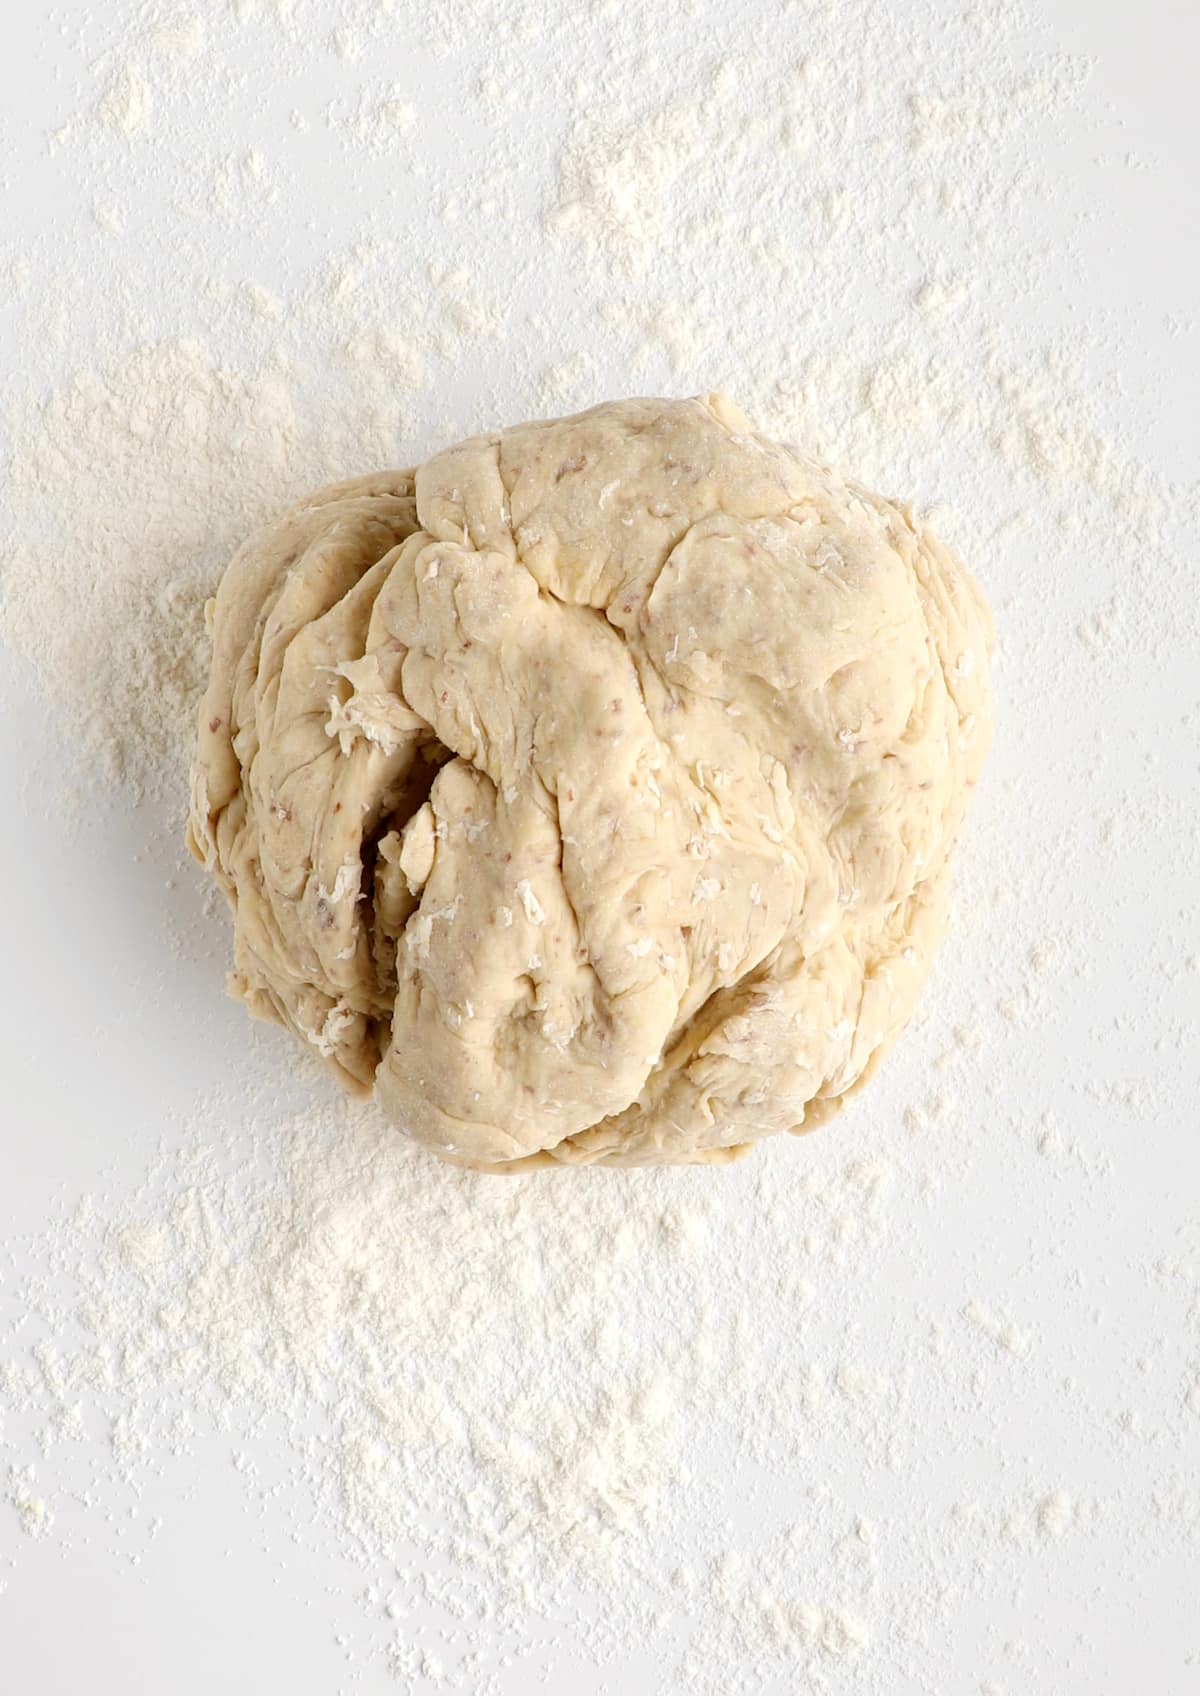 Vegan cinnamon roll dough rolled into a ball.